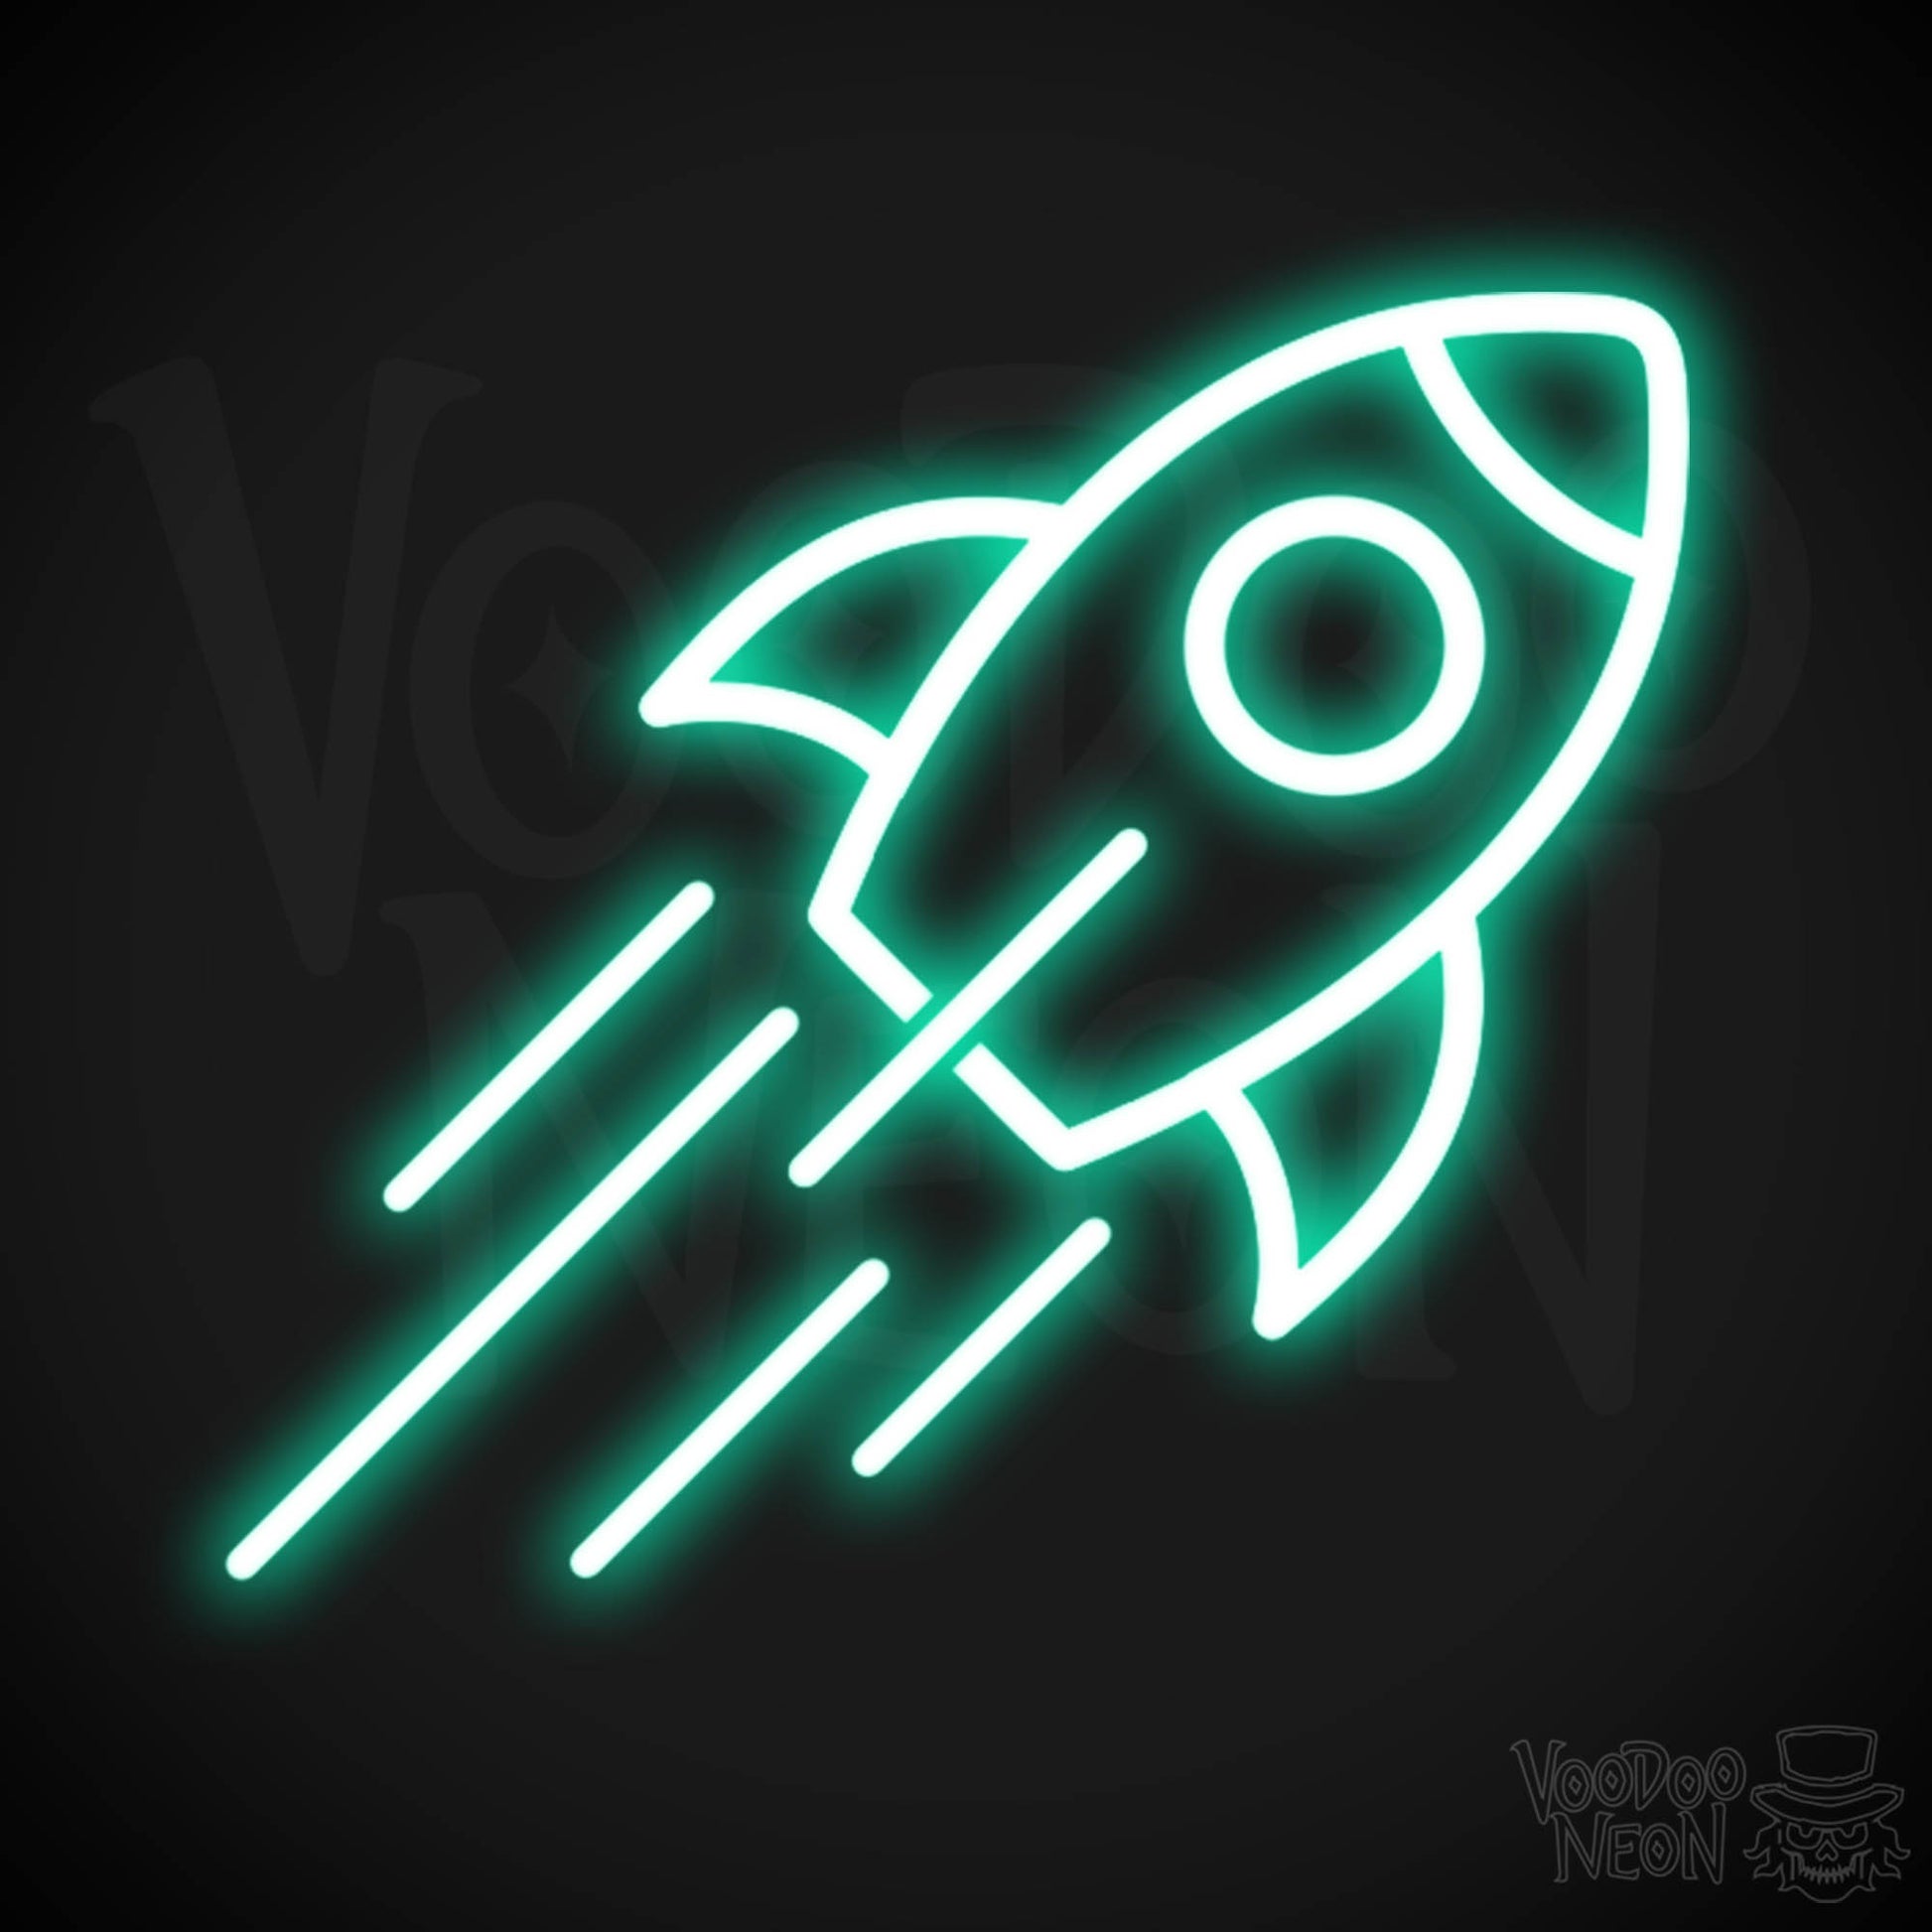 Neon Rocket - Rocket Neon Sign - Rocket Ship Neon Wall Art - Color Light Green